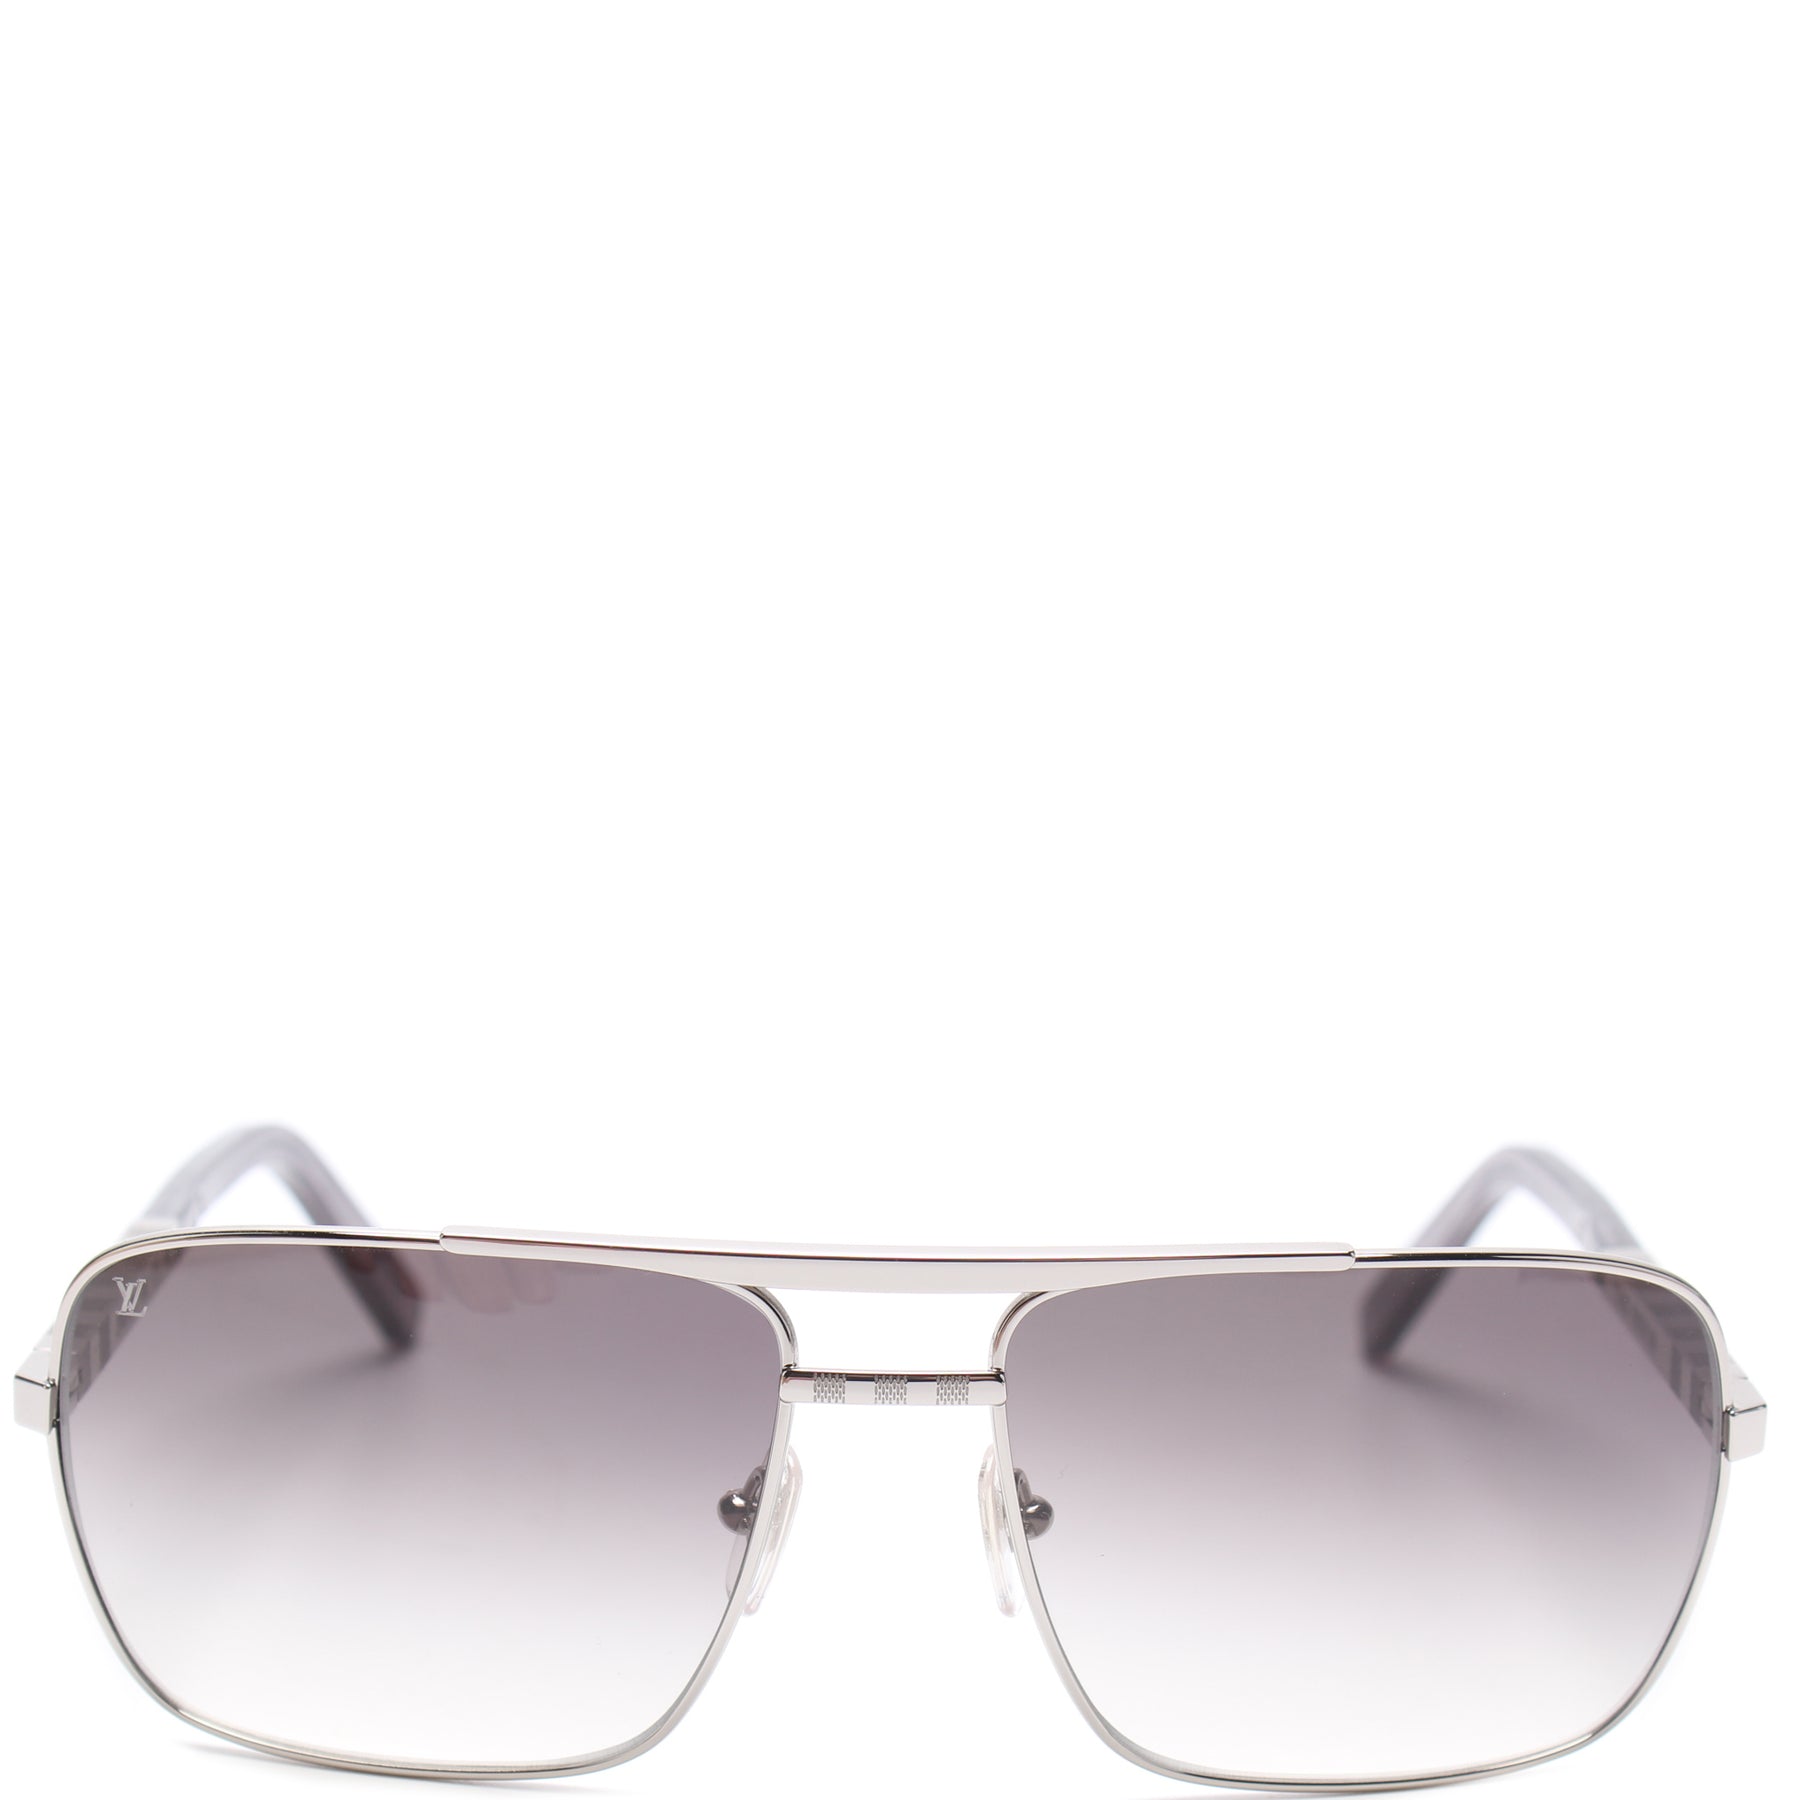 Louis Vuitton Shades / Sunglasses / Attitude